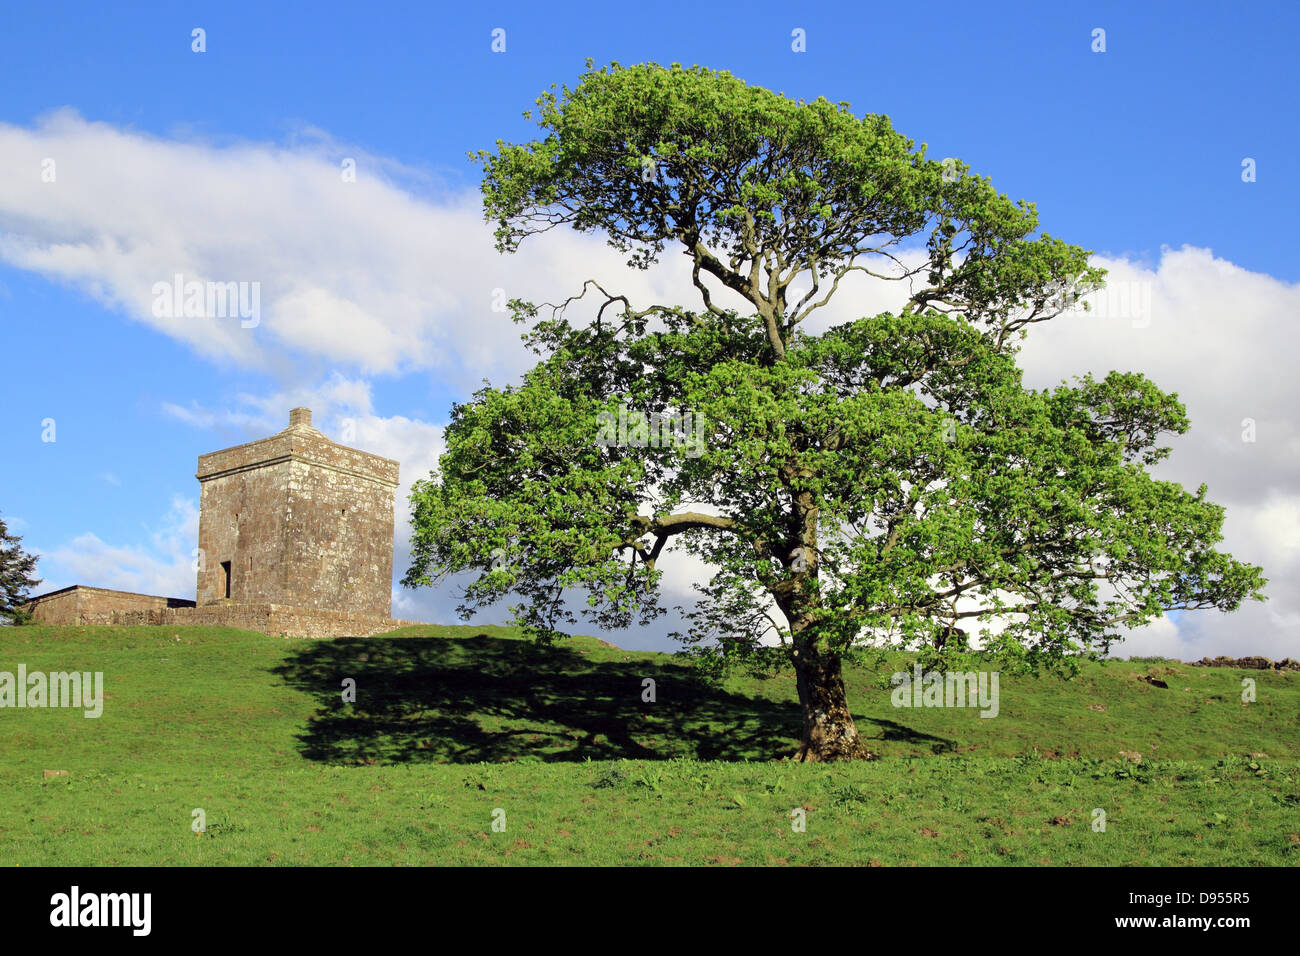 Il pentimento Tower, Annandale, Dumfries and Galloway, Scotland, Regno Unito Foto Stock